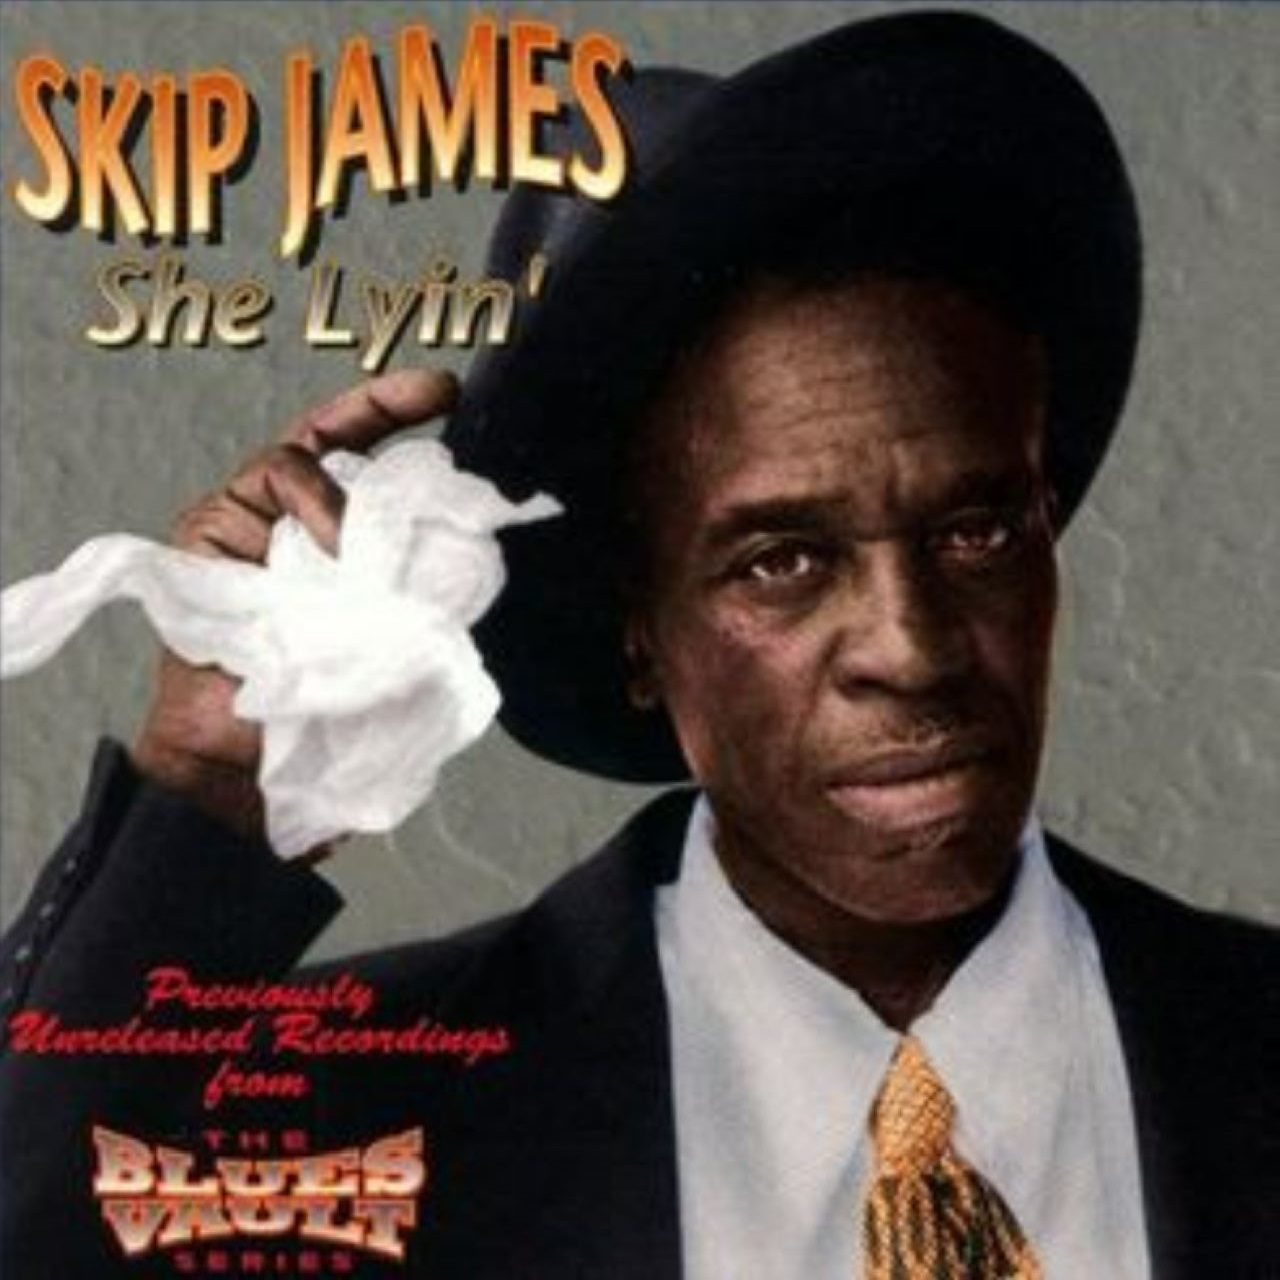 Skip James – She Lyin’ cover album